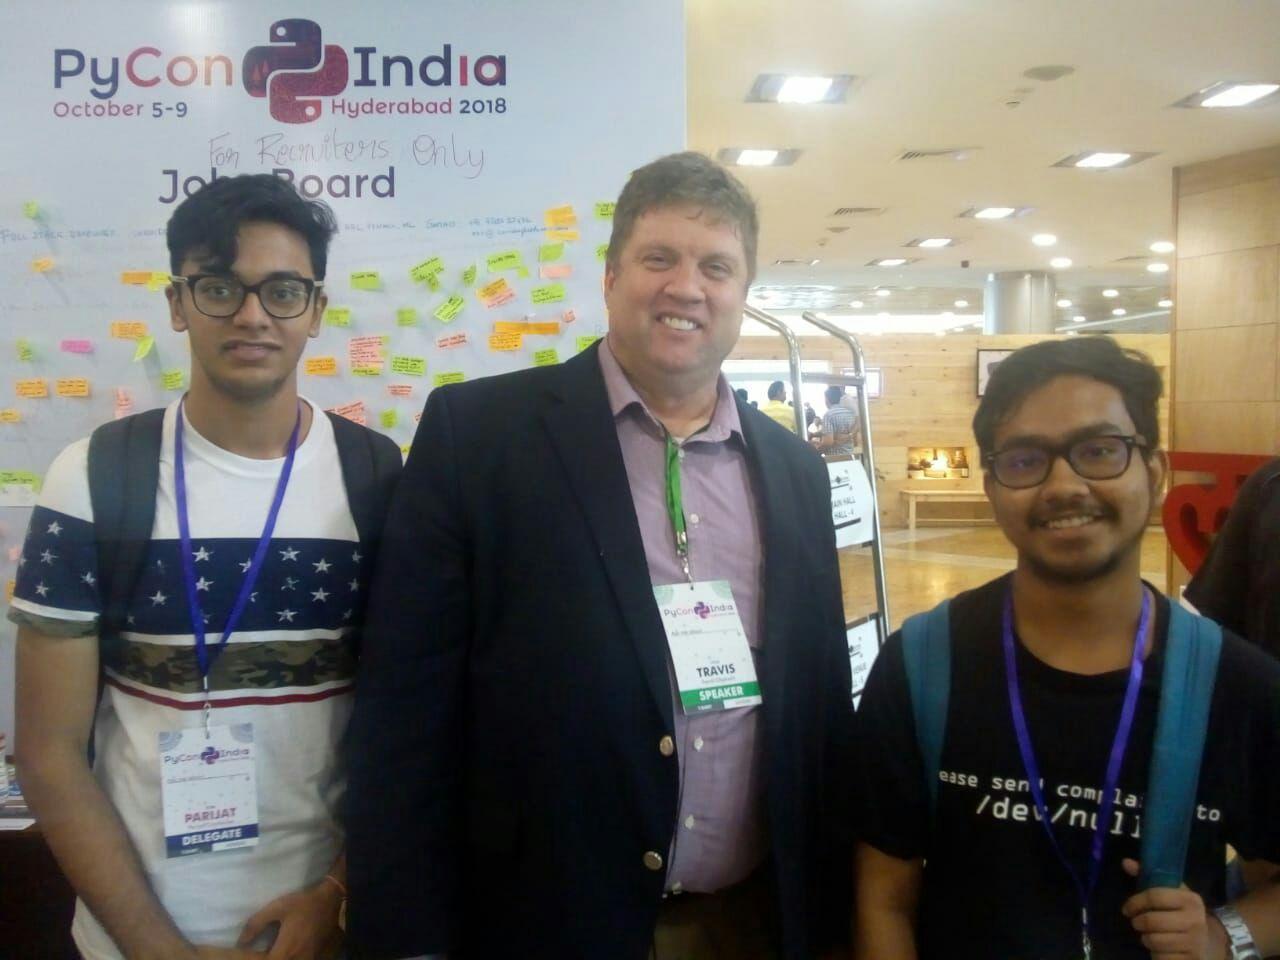 Travis Oliphant and Dedipyaman Das at Pycon India 2018